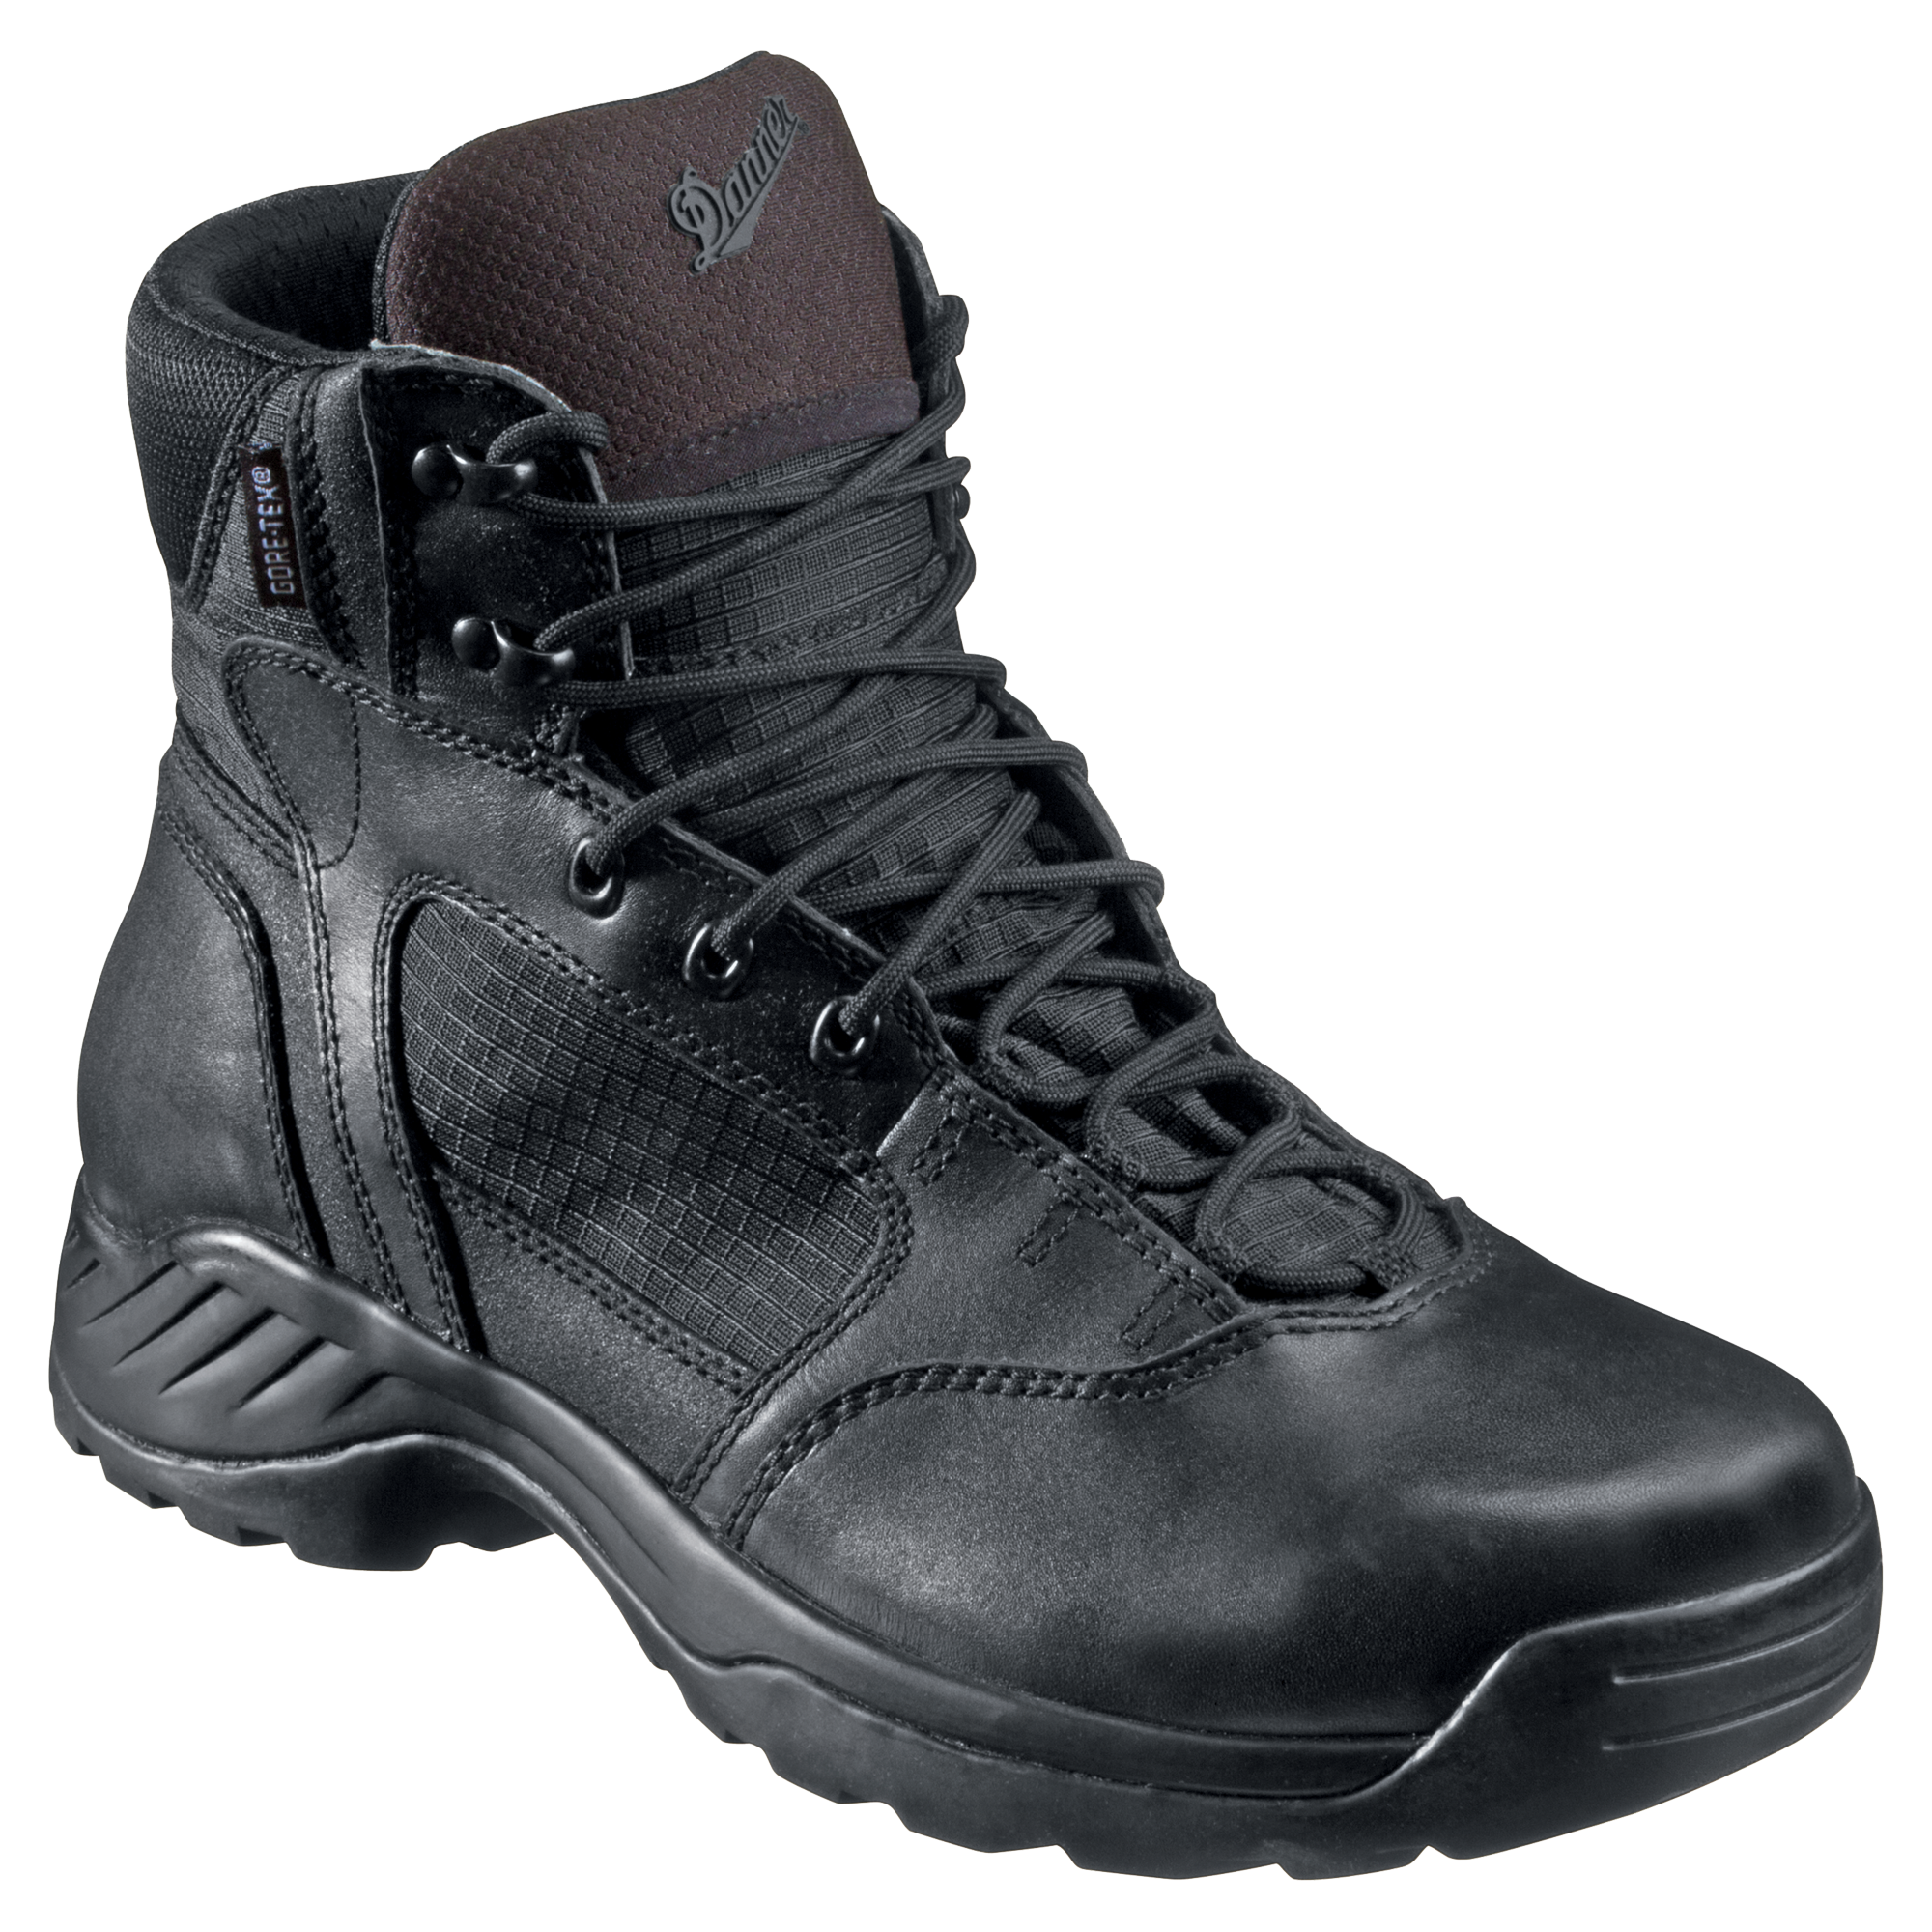 Danner Kinetic Side-Zip GORE-TEX Work Boots for Men - Black - 15W